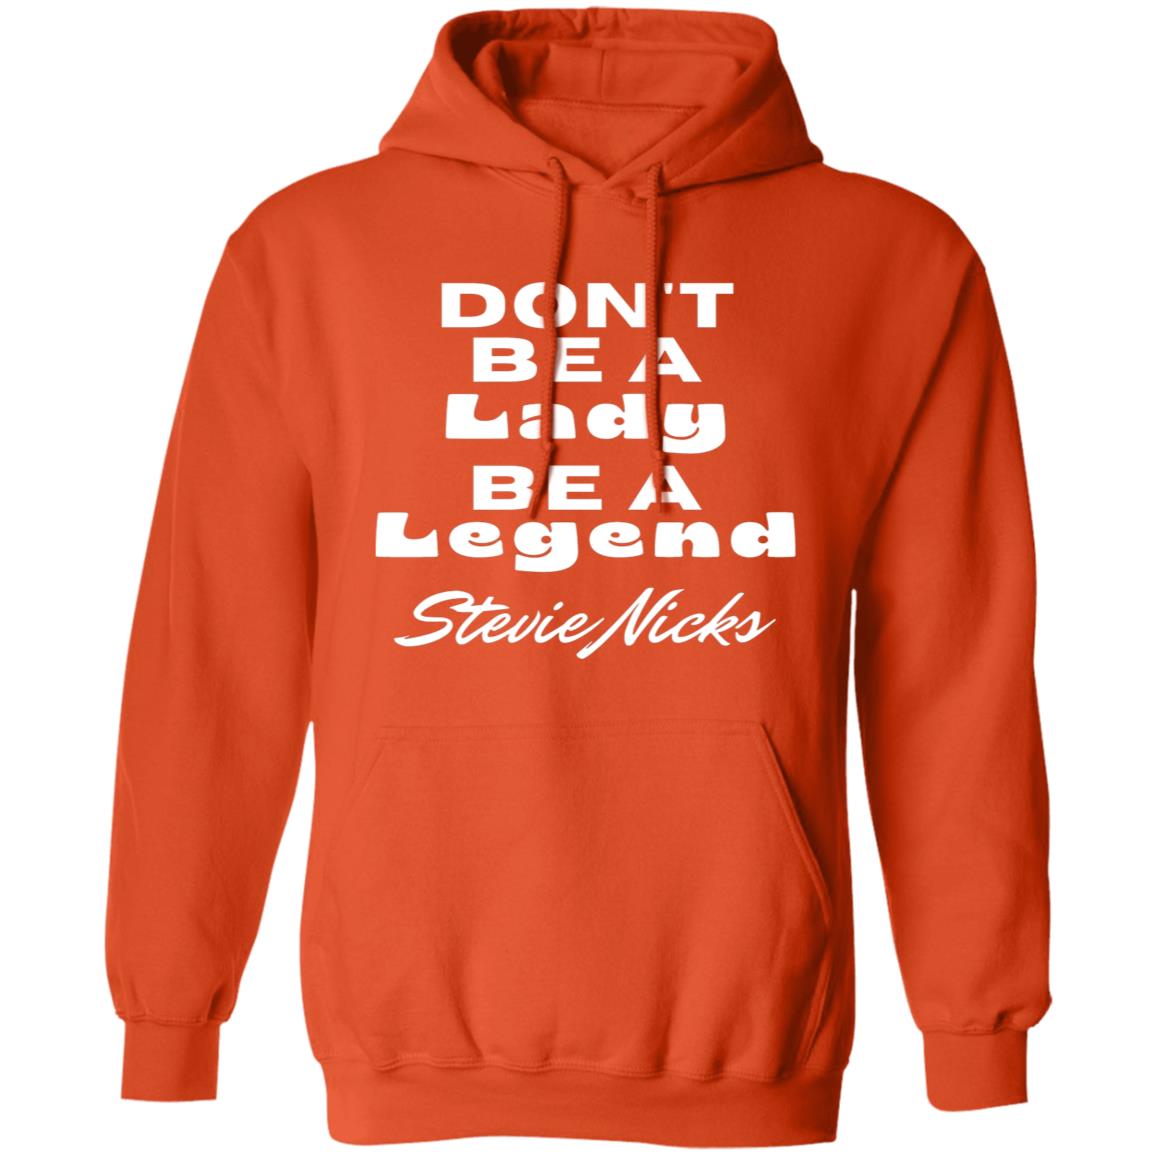 Stevie Nicks Be A Legend Hooded Sweatshirt